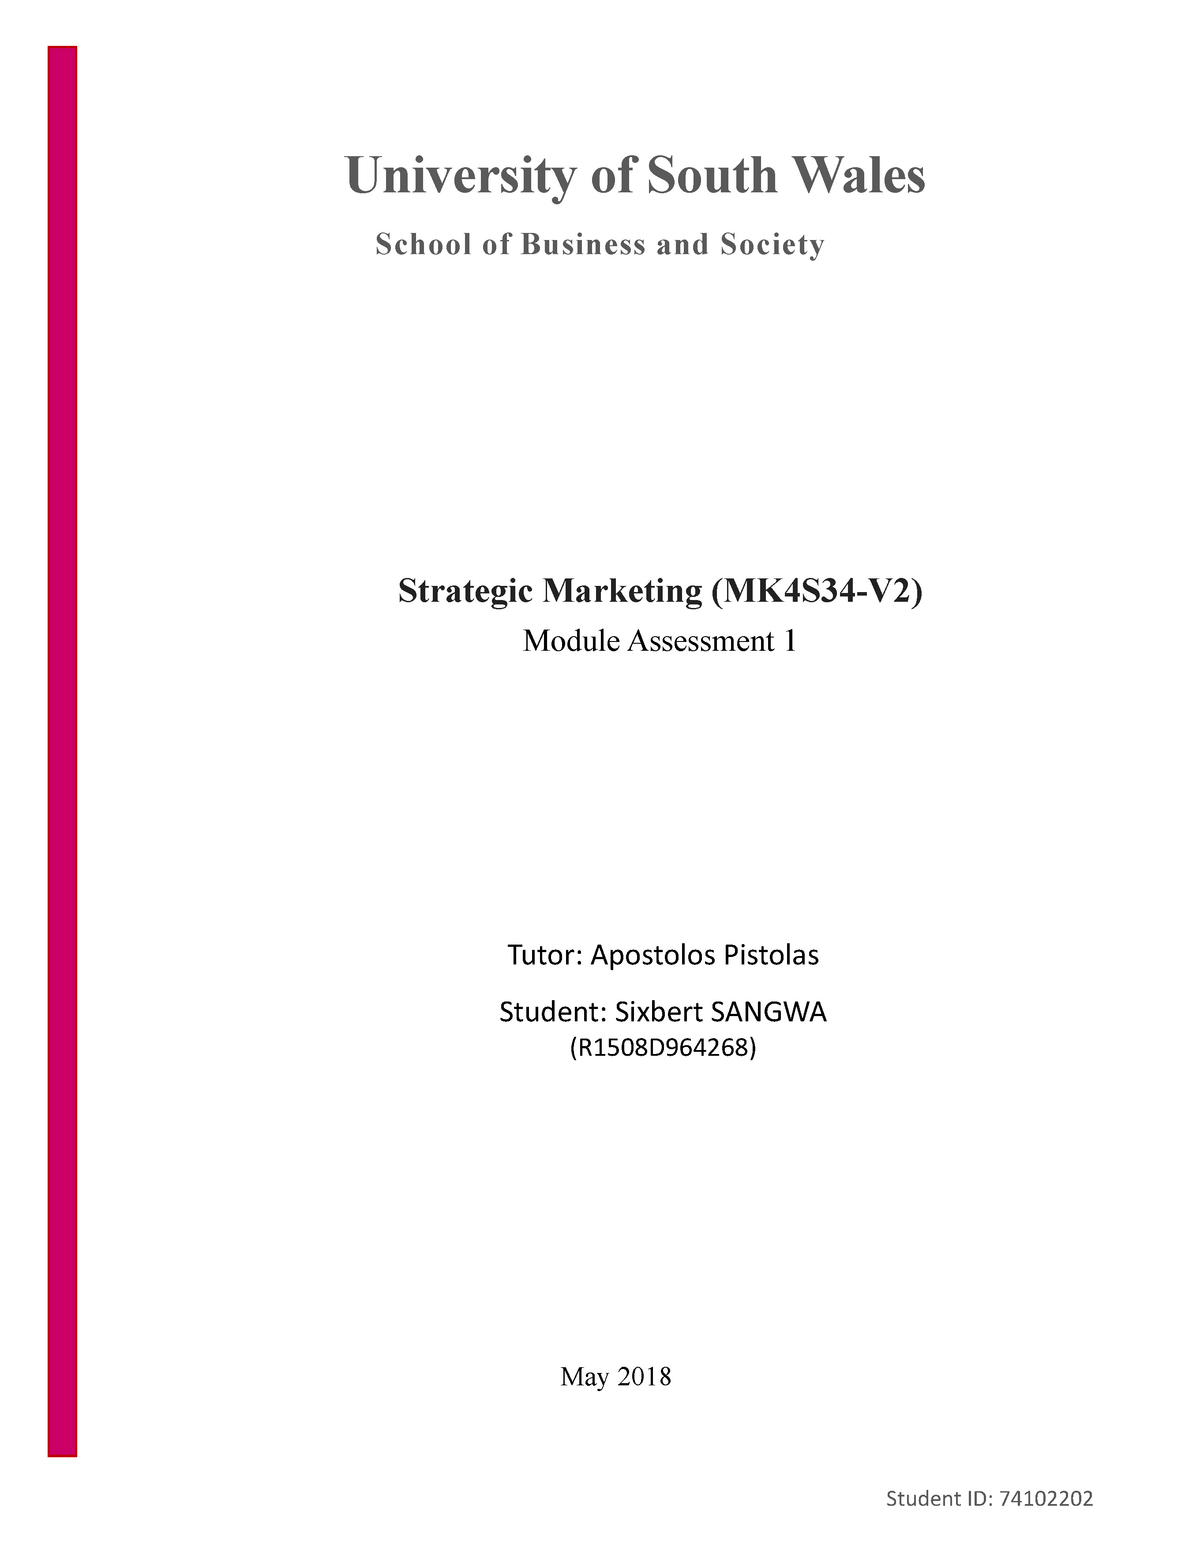 Strategic Marketing -MK4S34-V2 Essay sixbert sangwa ass 1 - University ...